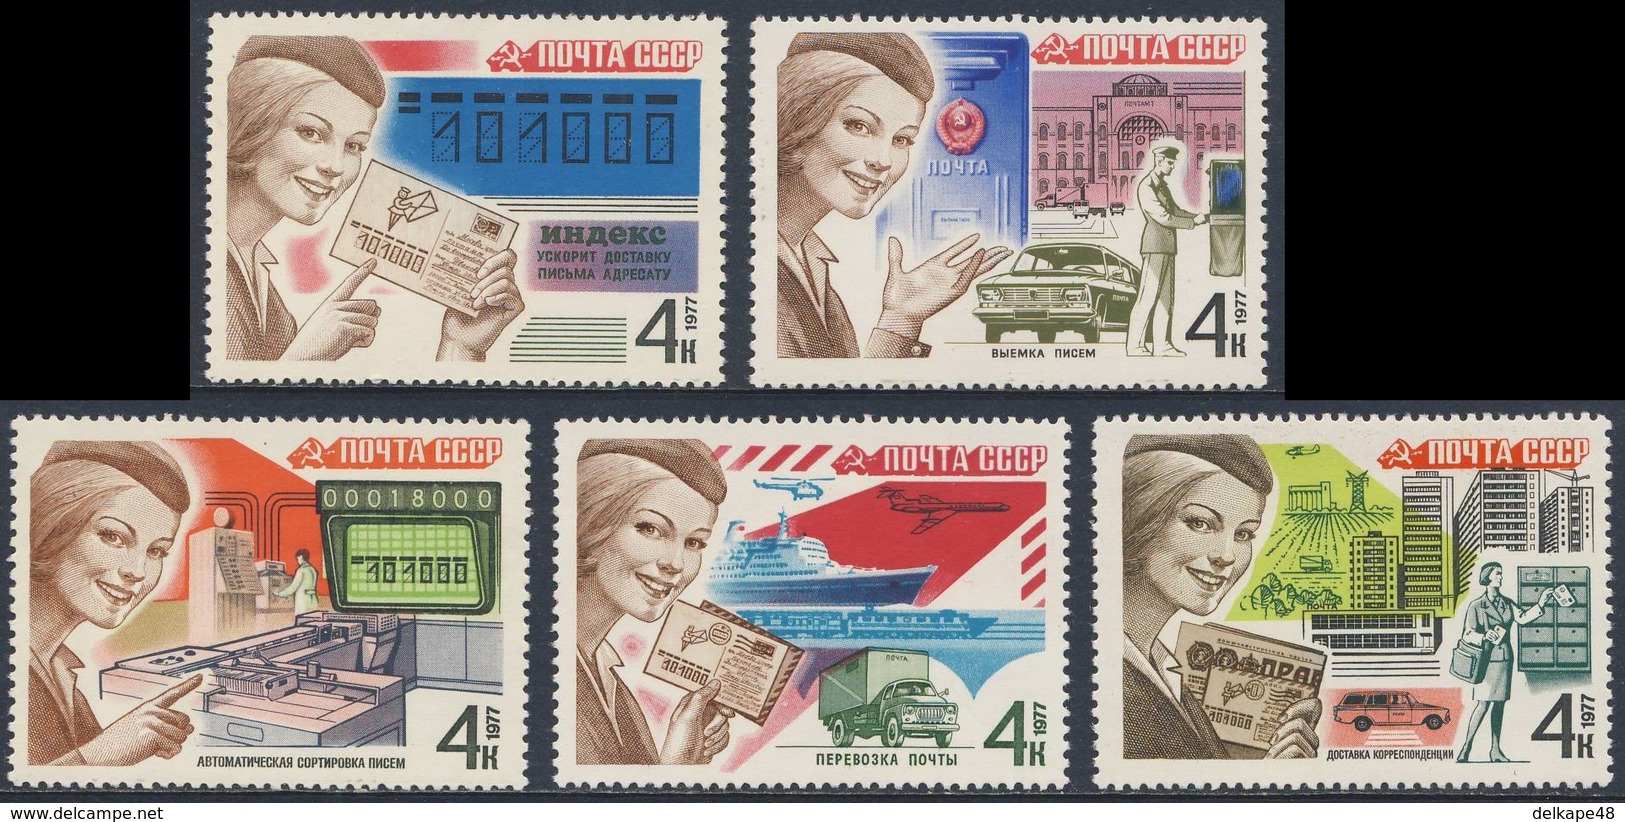 Soviet Unie CCCP Russia 1977 Mi 4671 /5 SG 4713 /7 ** Postal Communications / Postwesen In UdSSR - Post